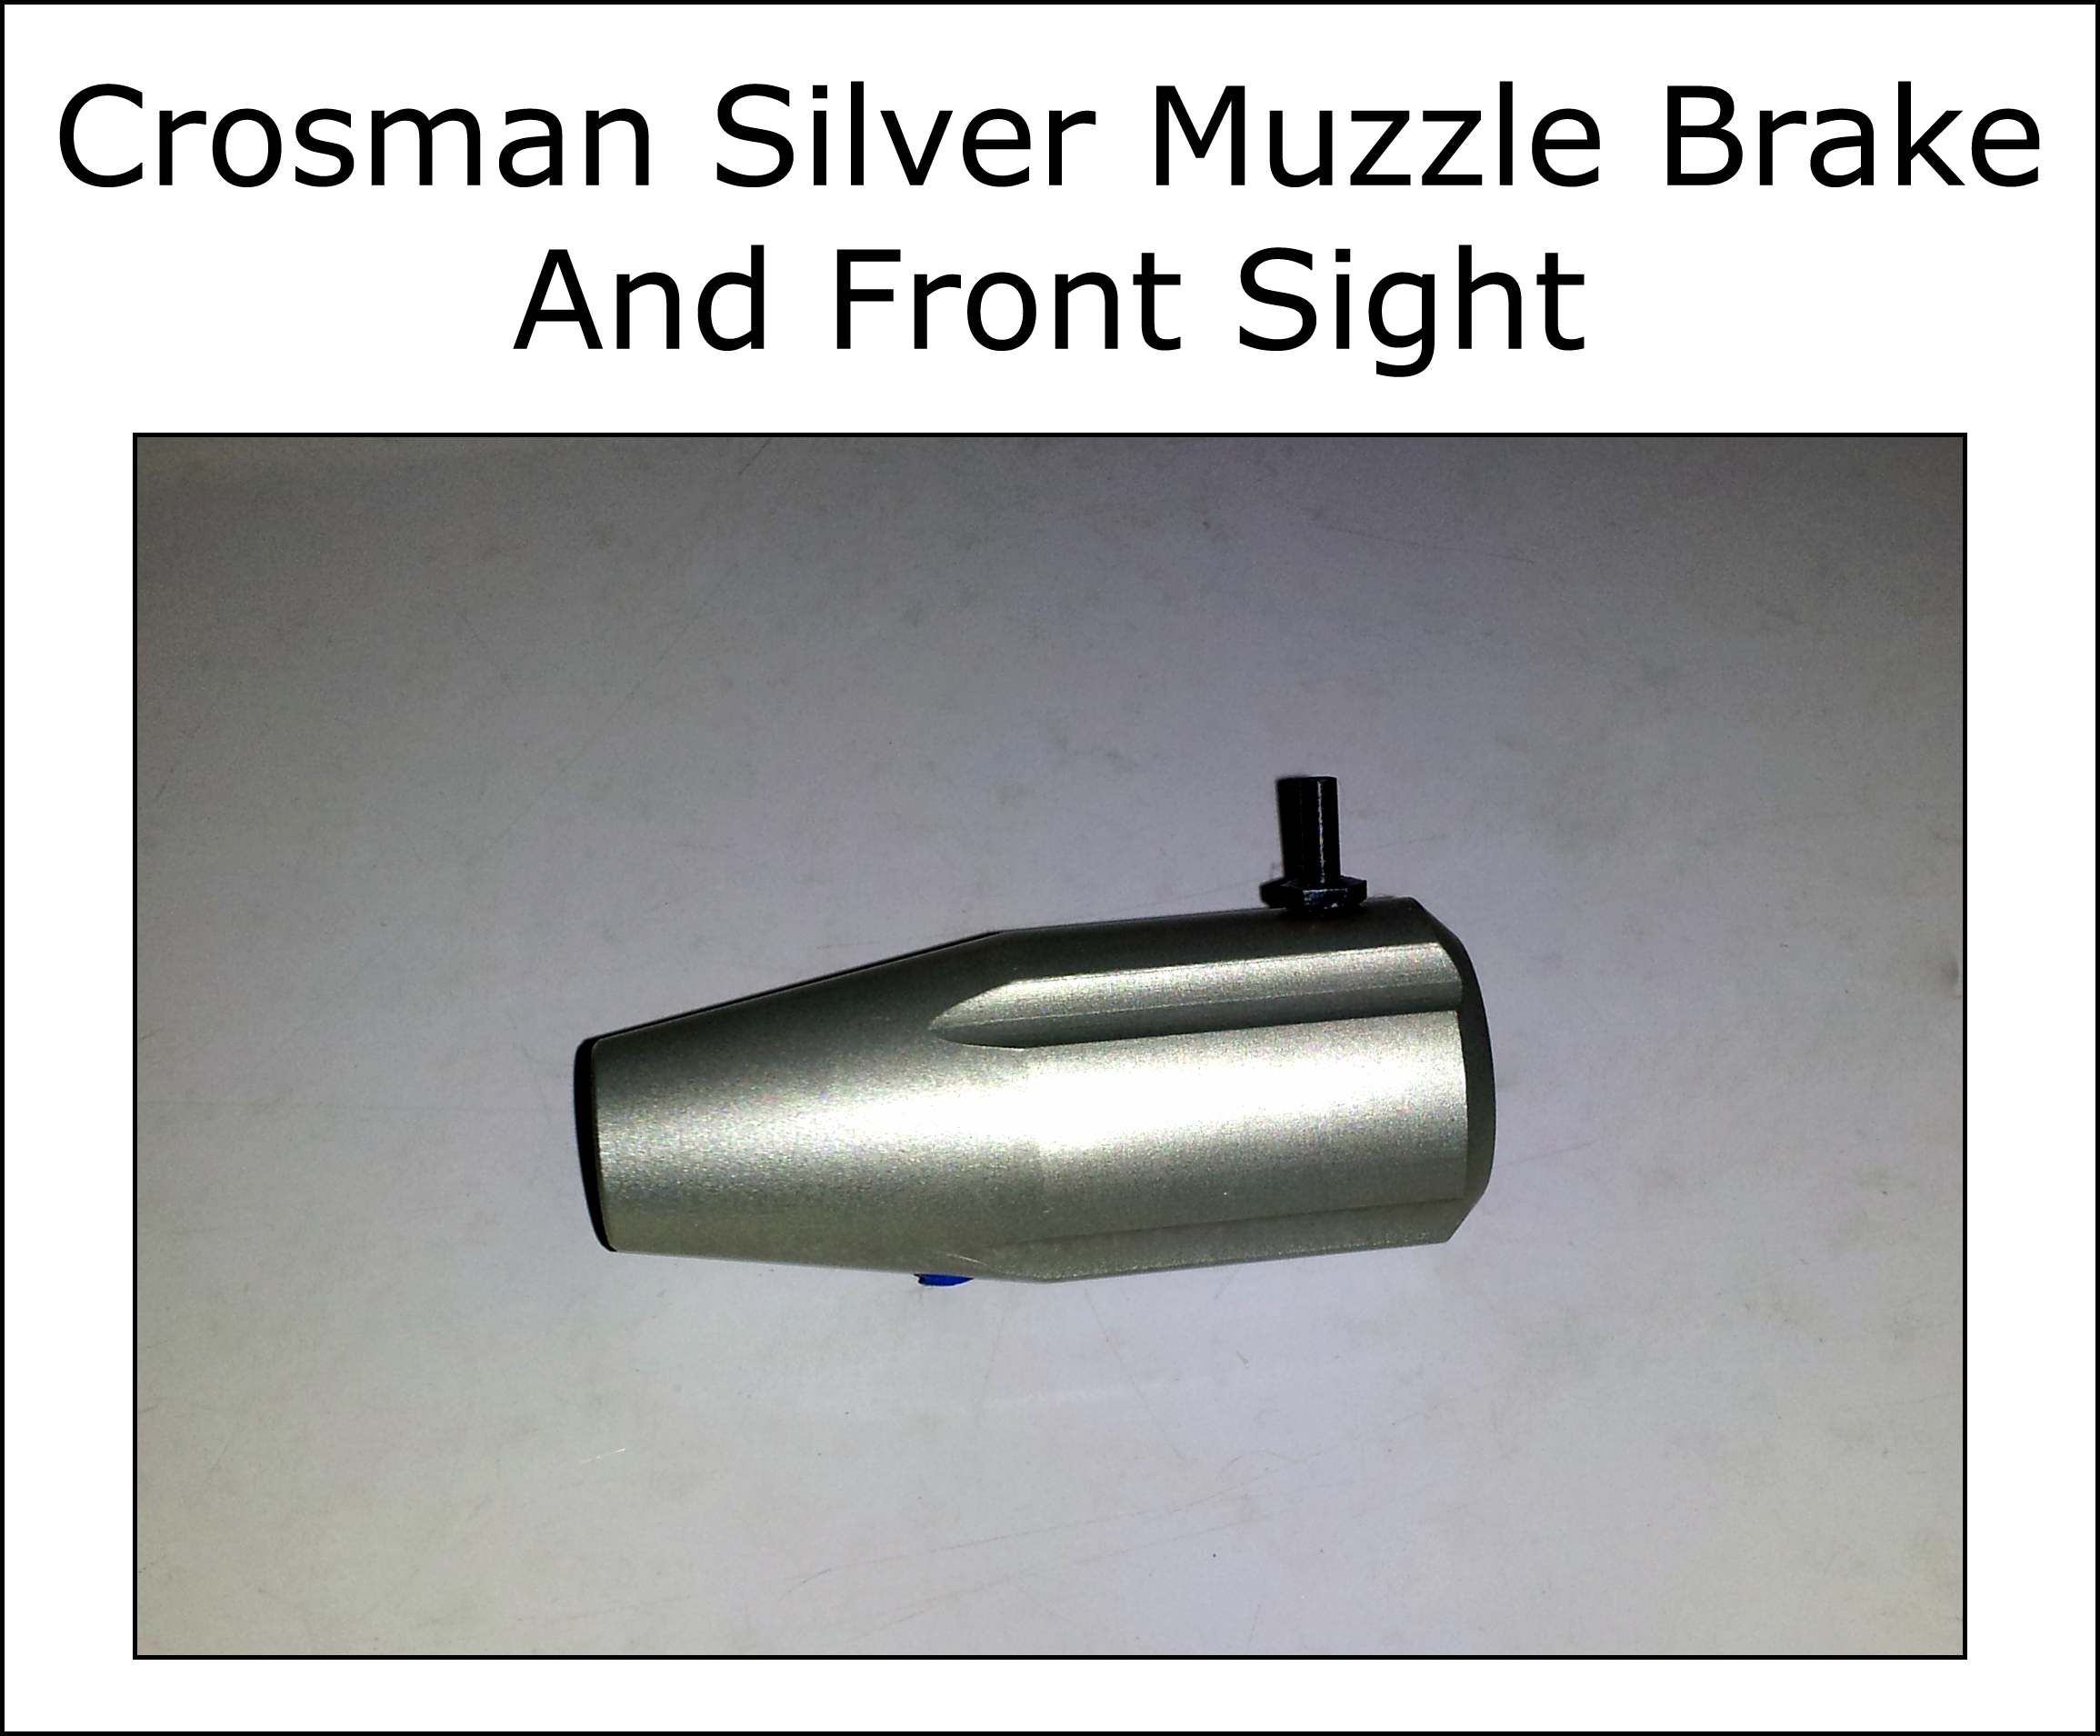 Crosman Vented & Fluted Aluminum Muzzle Brake 2240 2250 2260 2289 2300S 2300T 